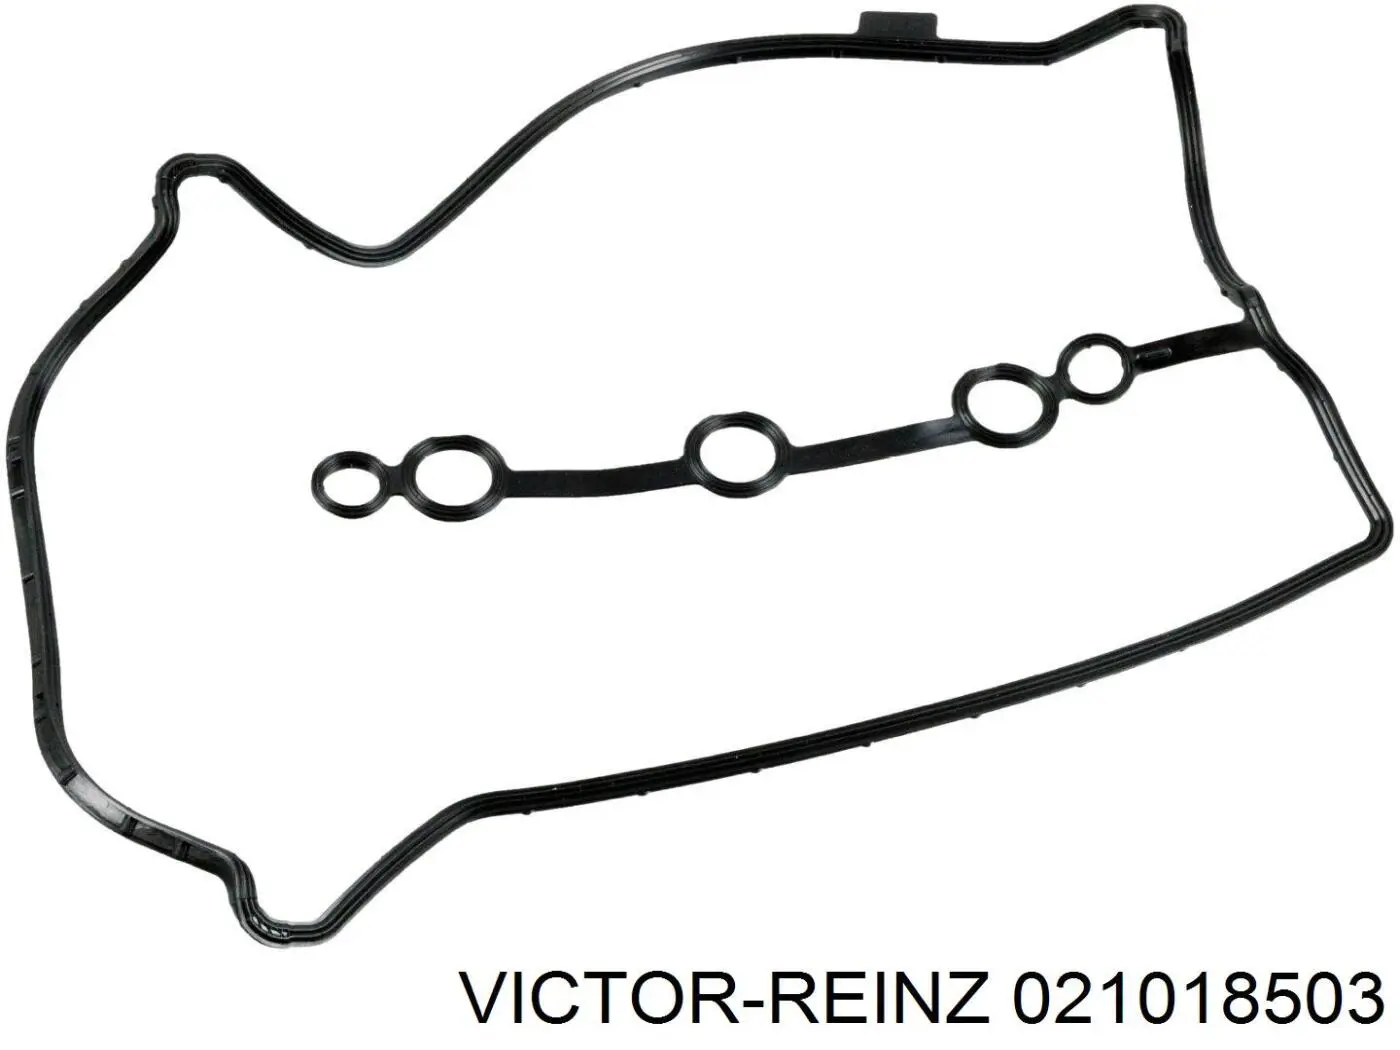 02-10185-03 Victor Reinz kit superior de vedantes de motor